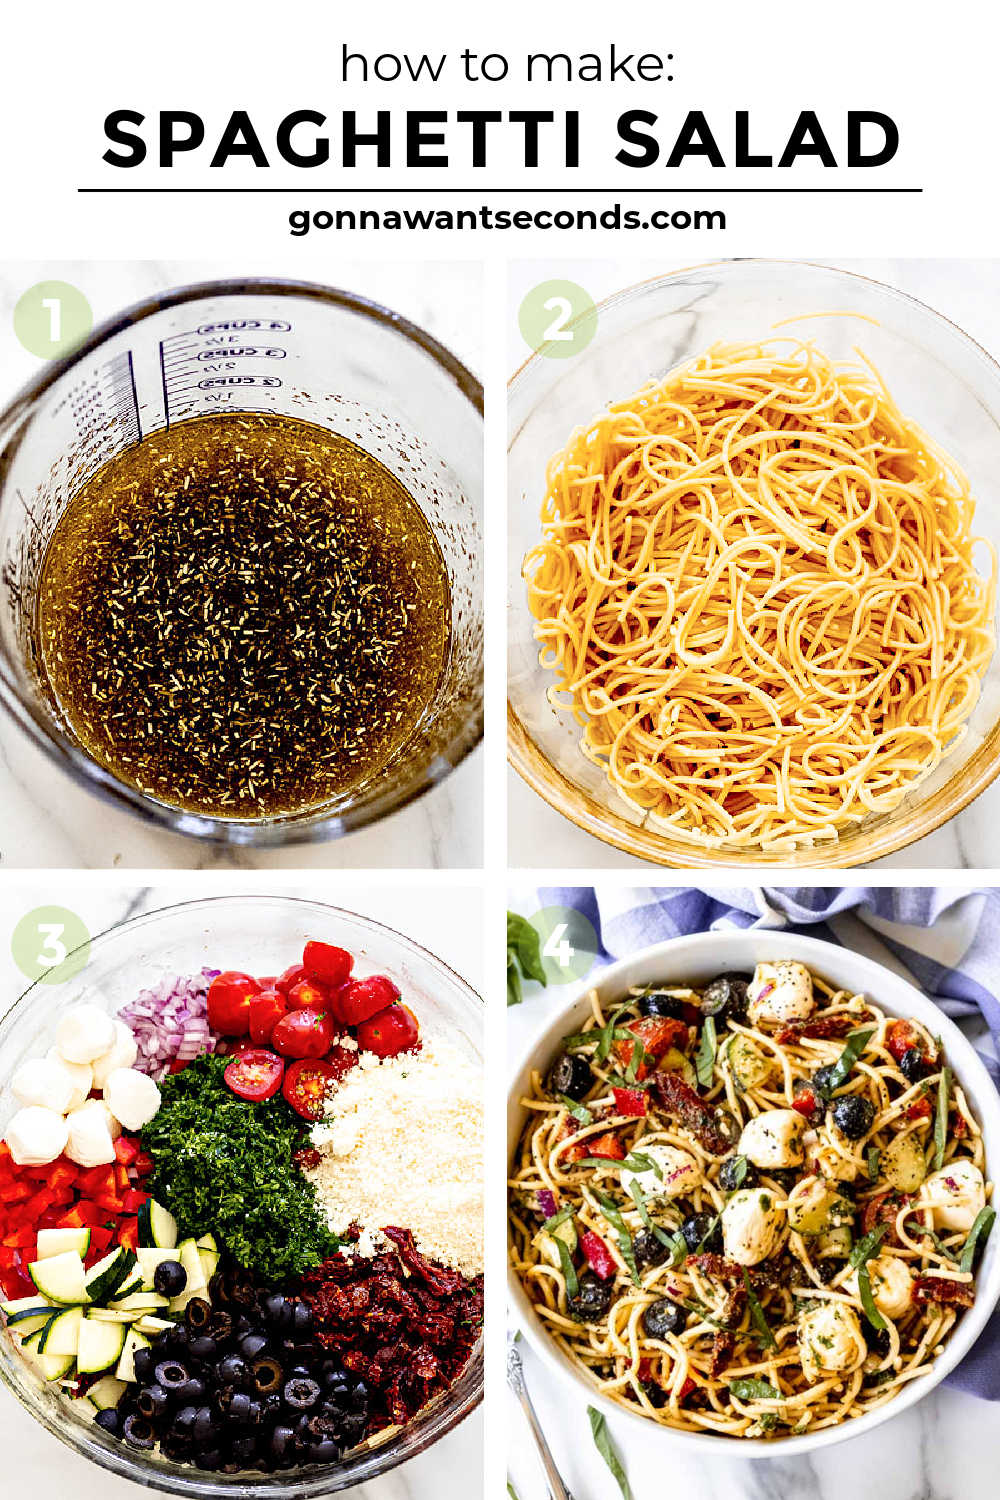 Step by step how to make spaghetti salad